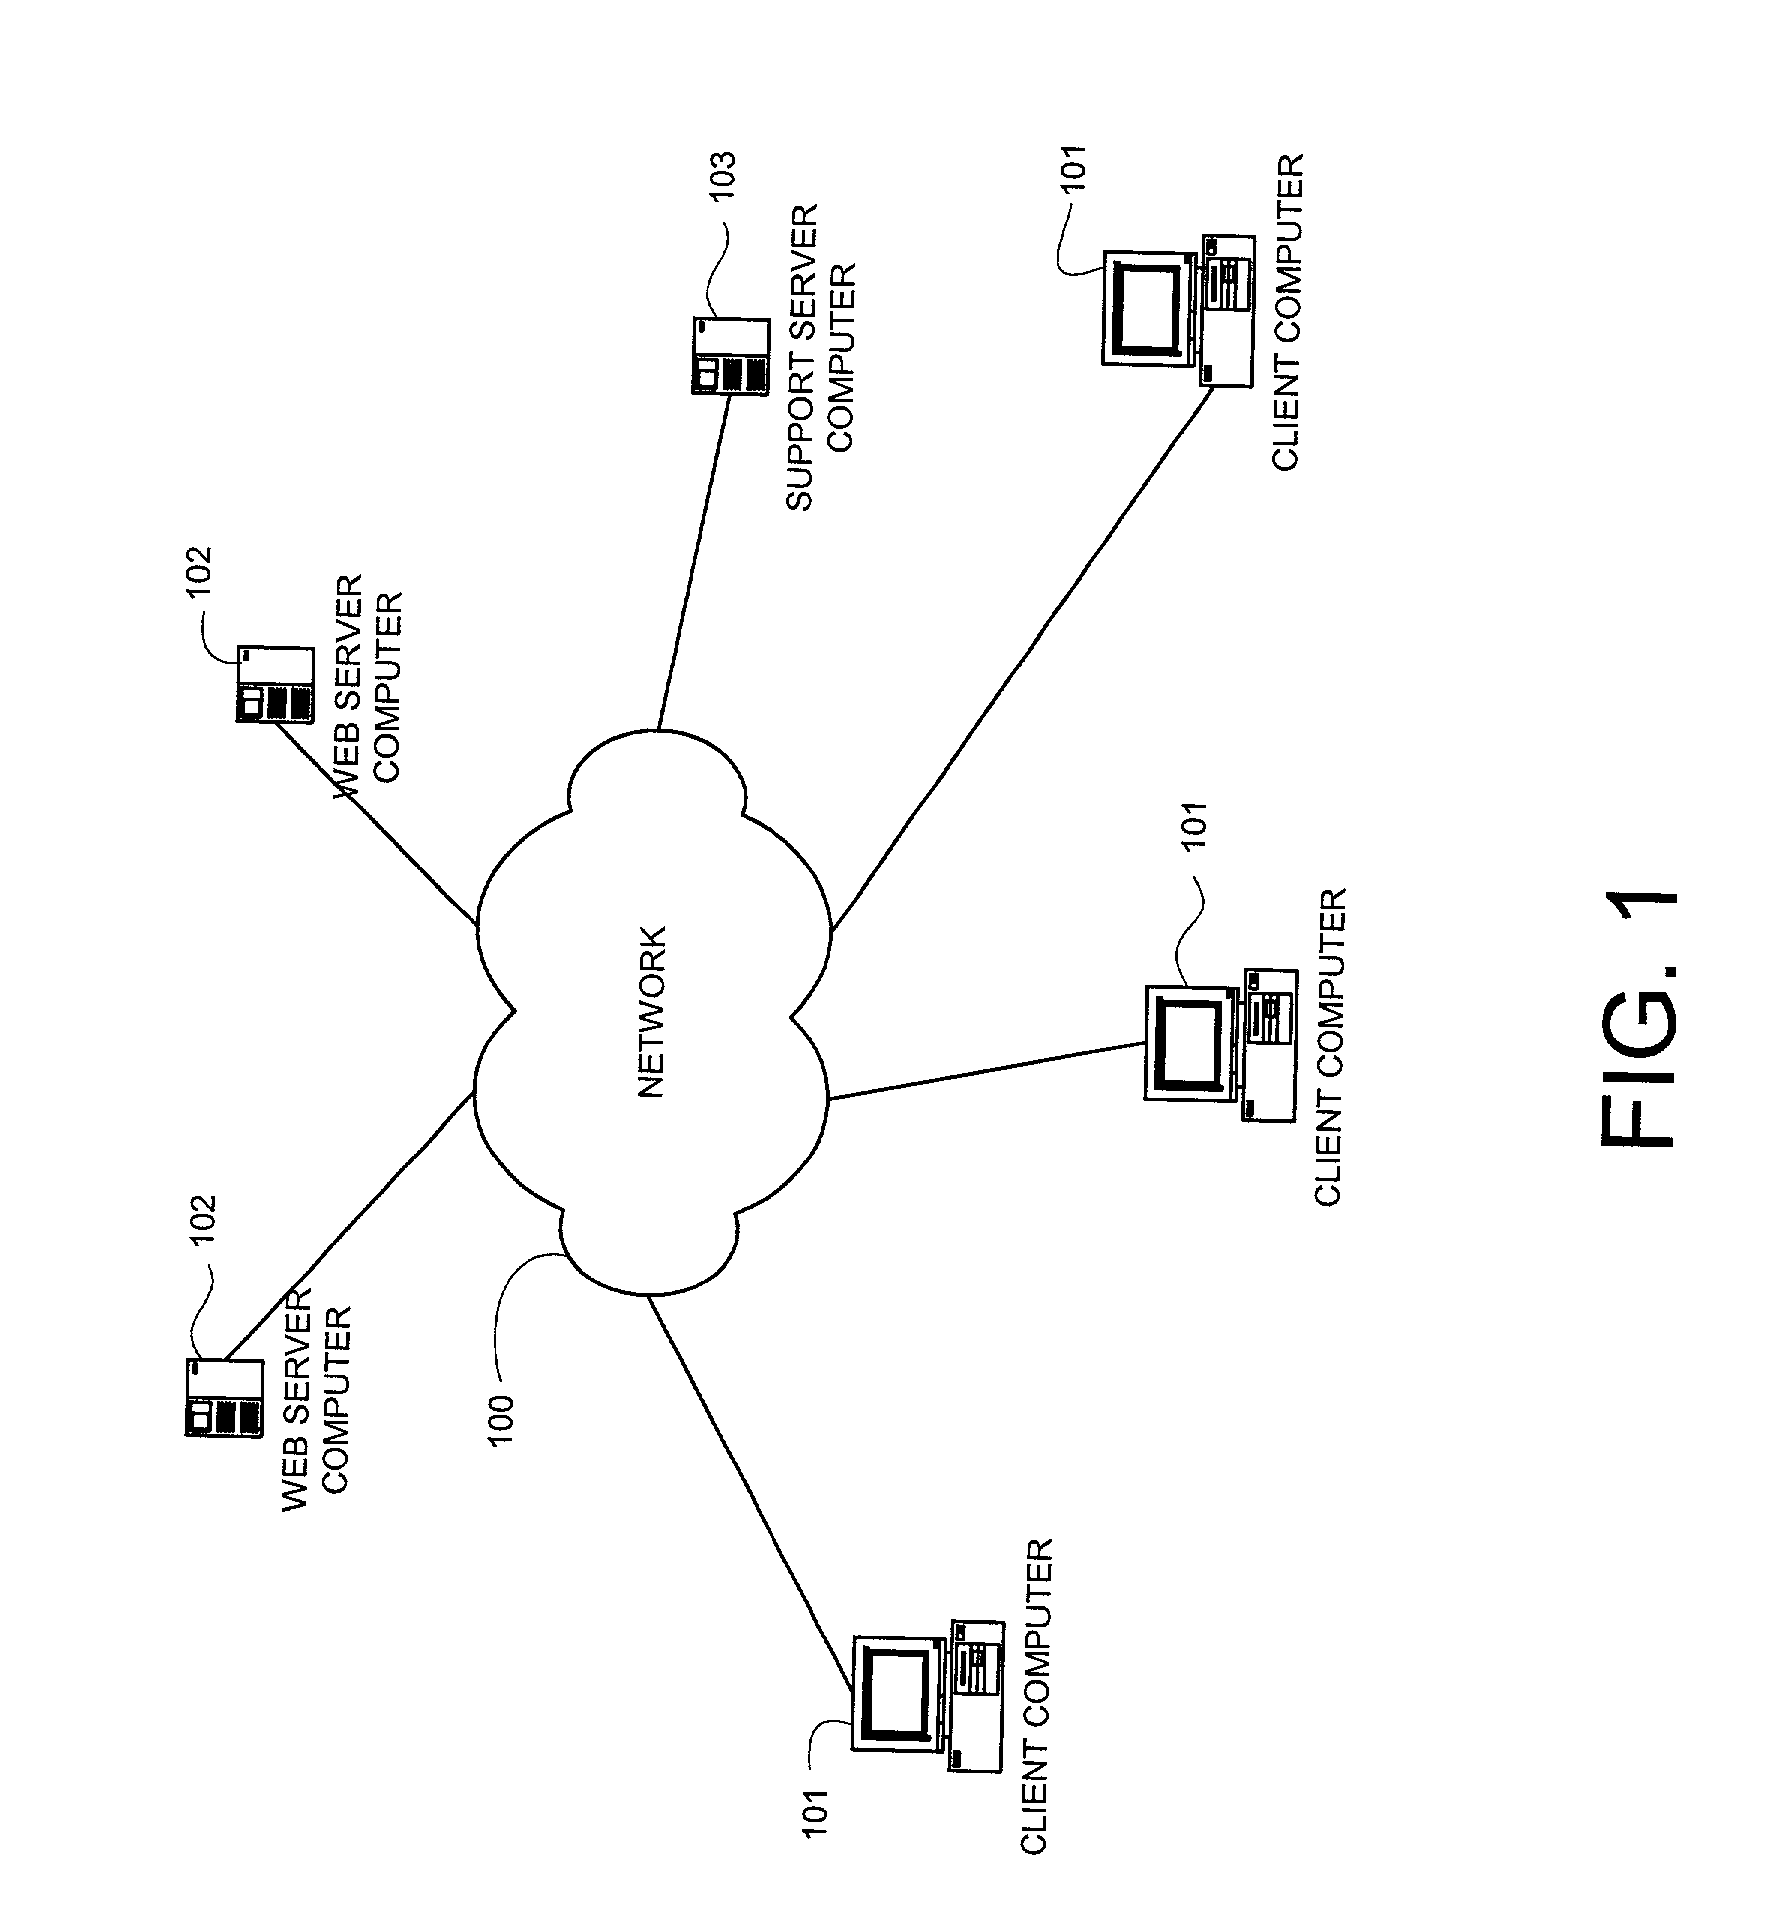 Method and apparatus for providing information regarding computer programs